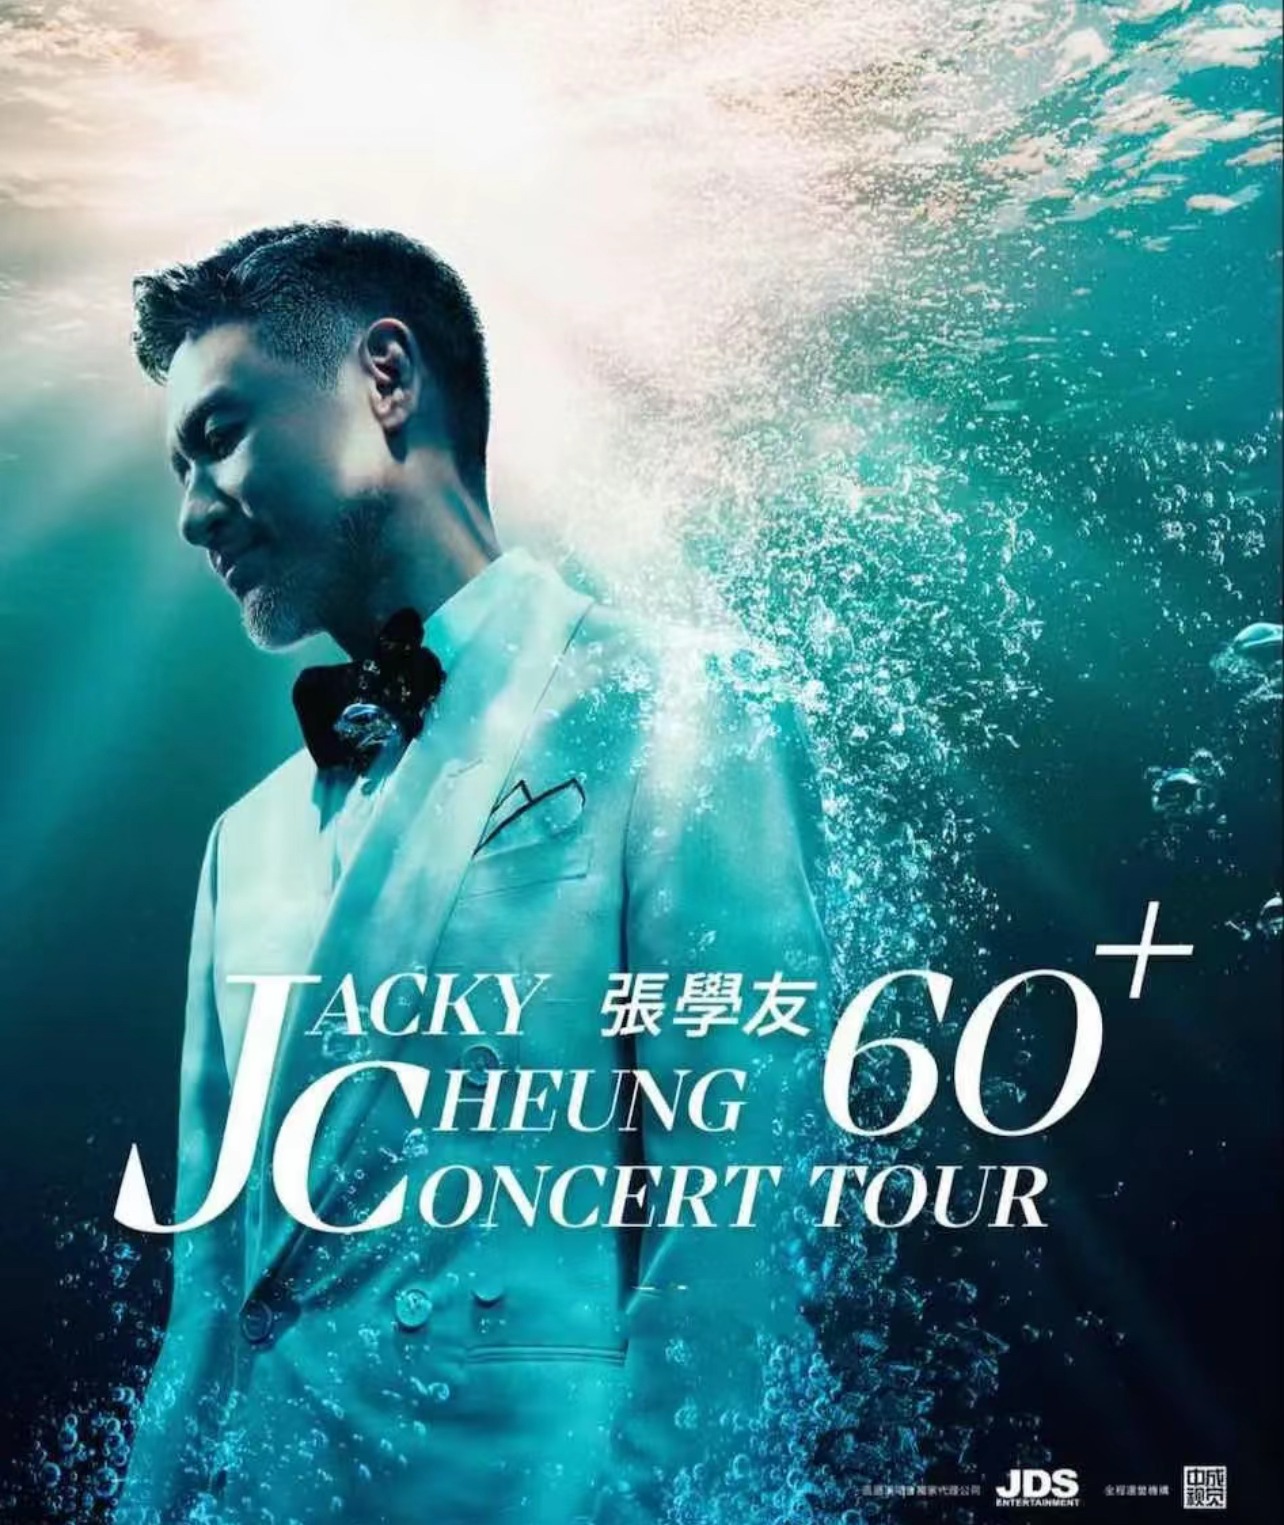 JACKY CHEUNG 60+ CONCERT TOUR 张学友60+巡回演唱会-深圳站